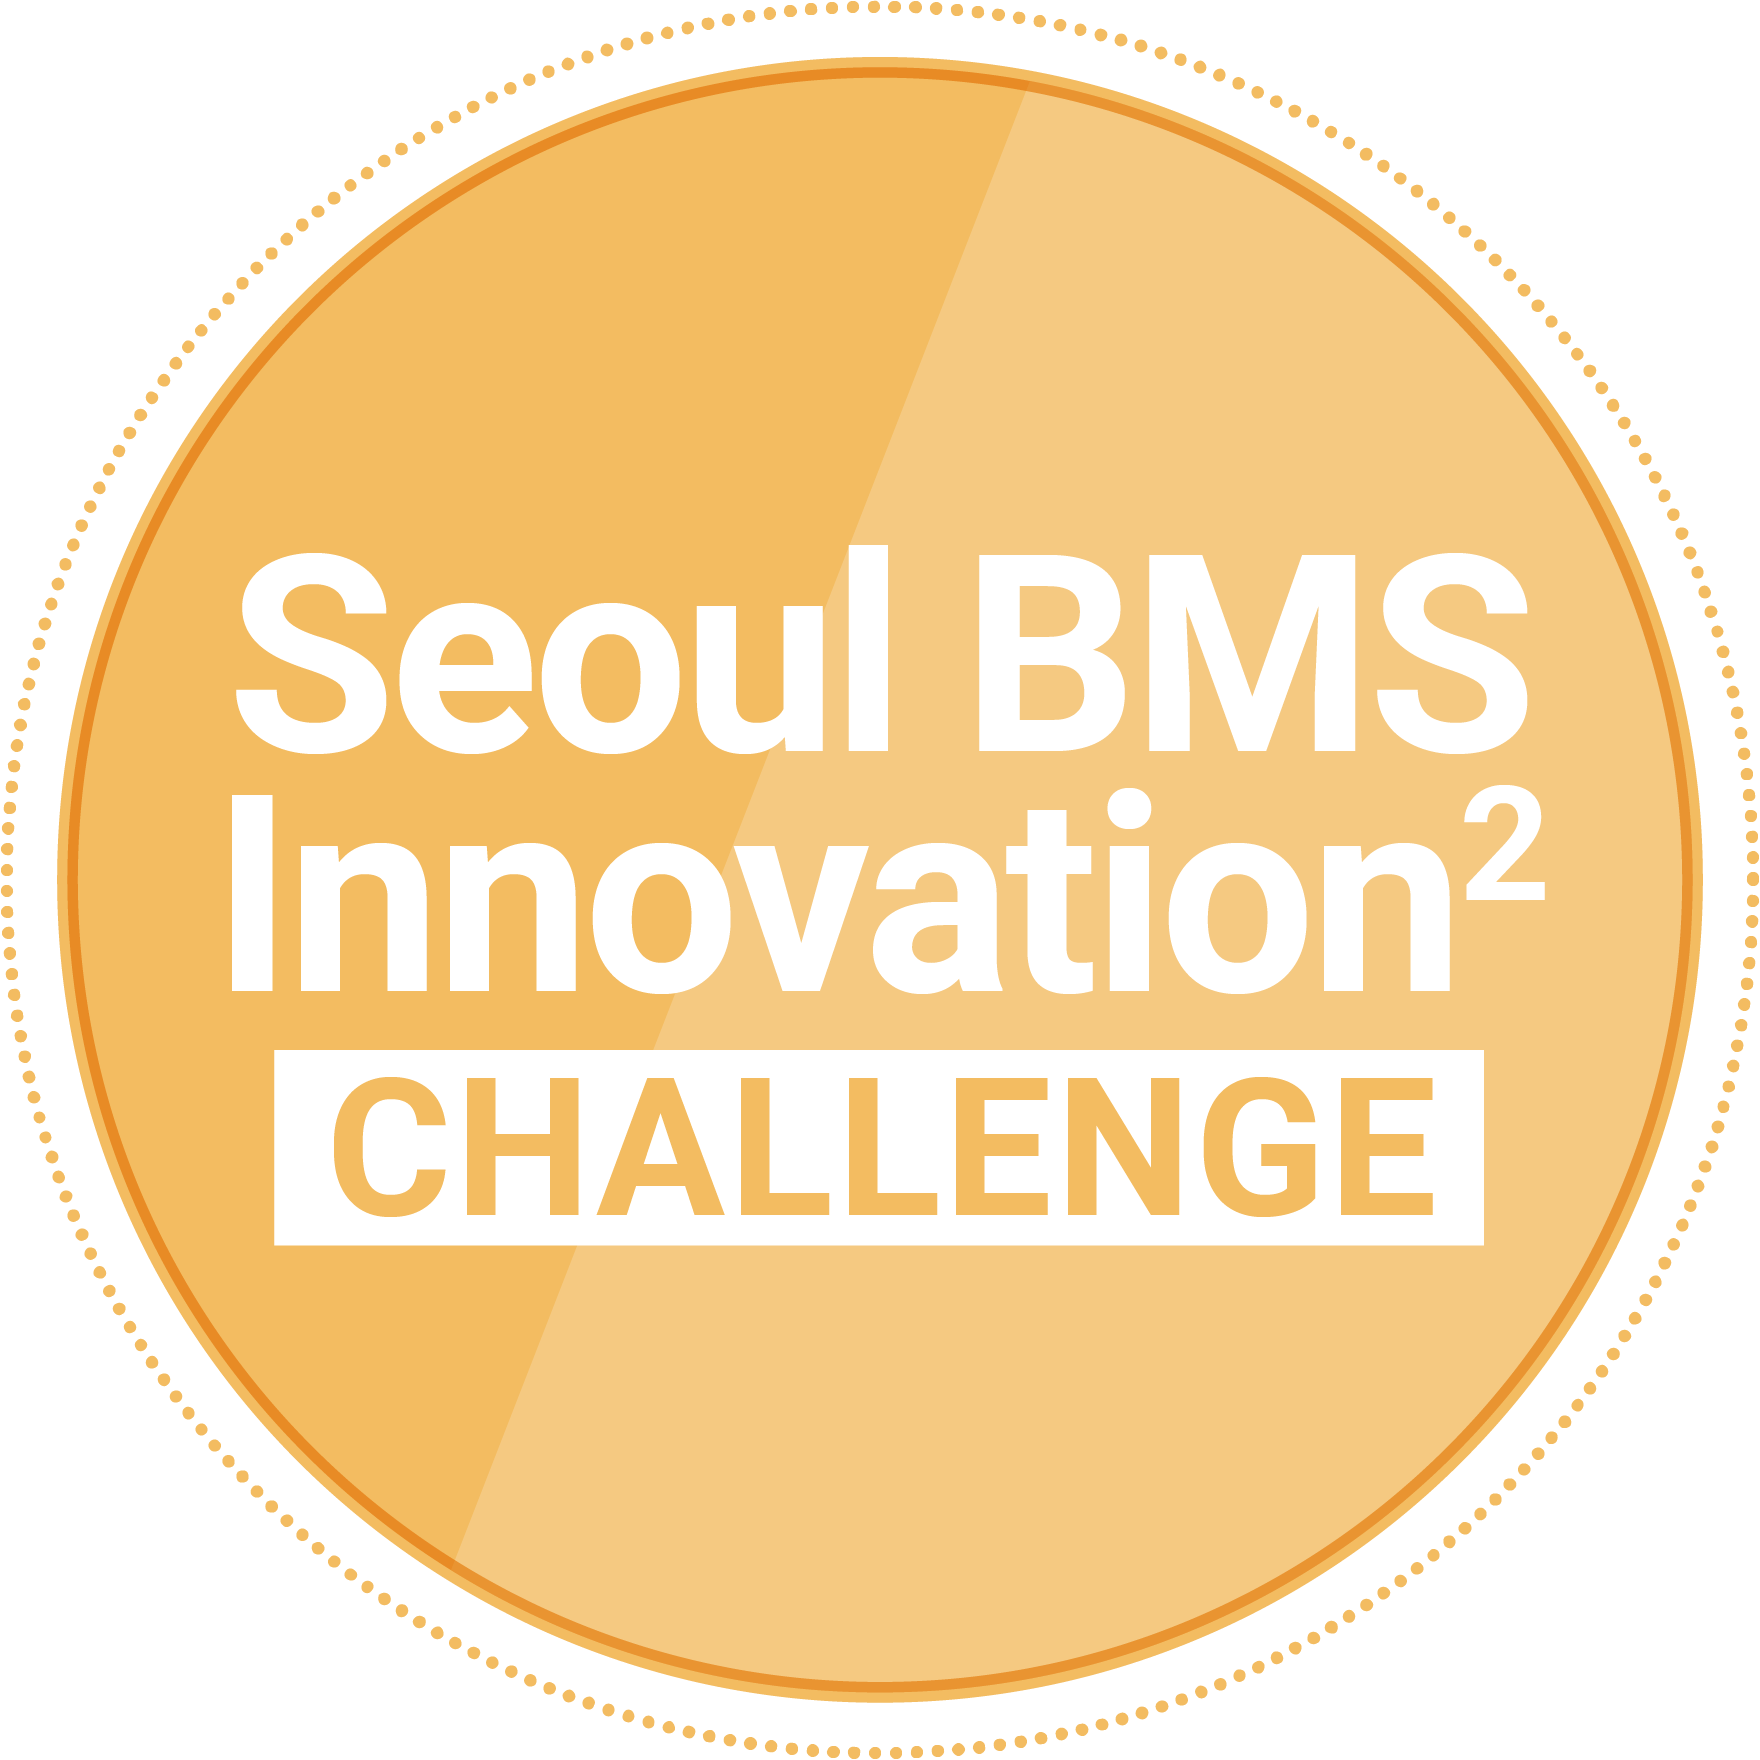 Seoul BMS Innovation 2 CHALLENGE